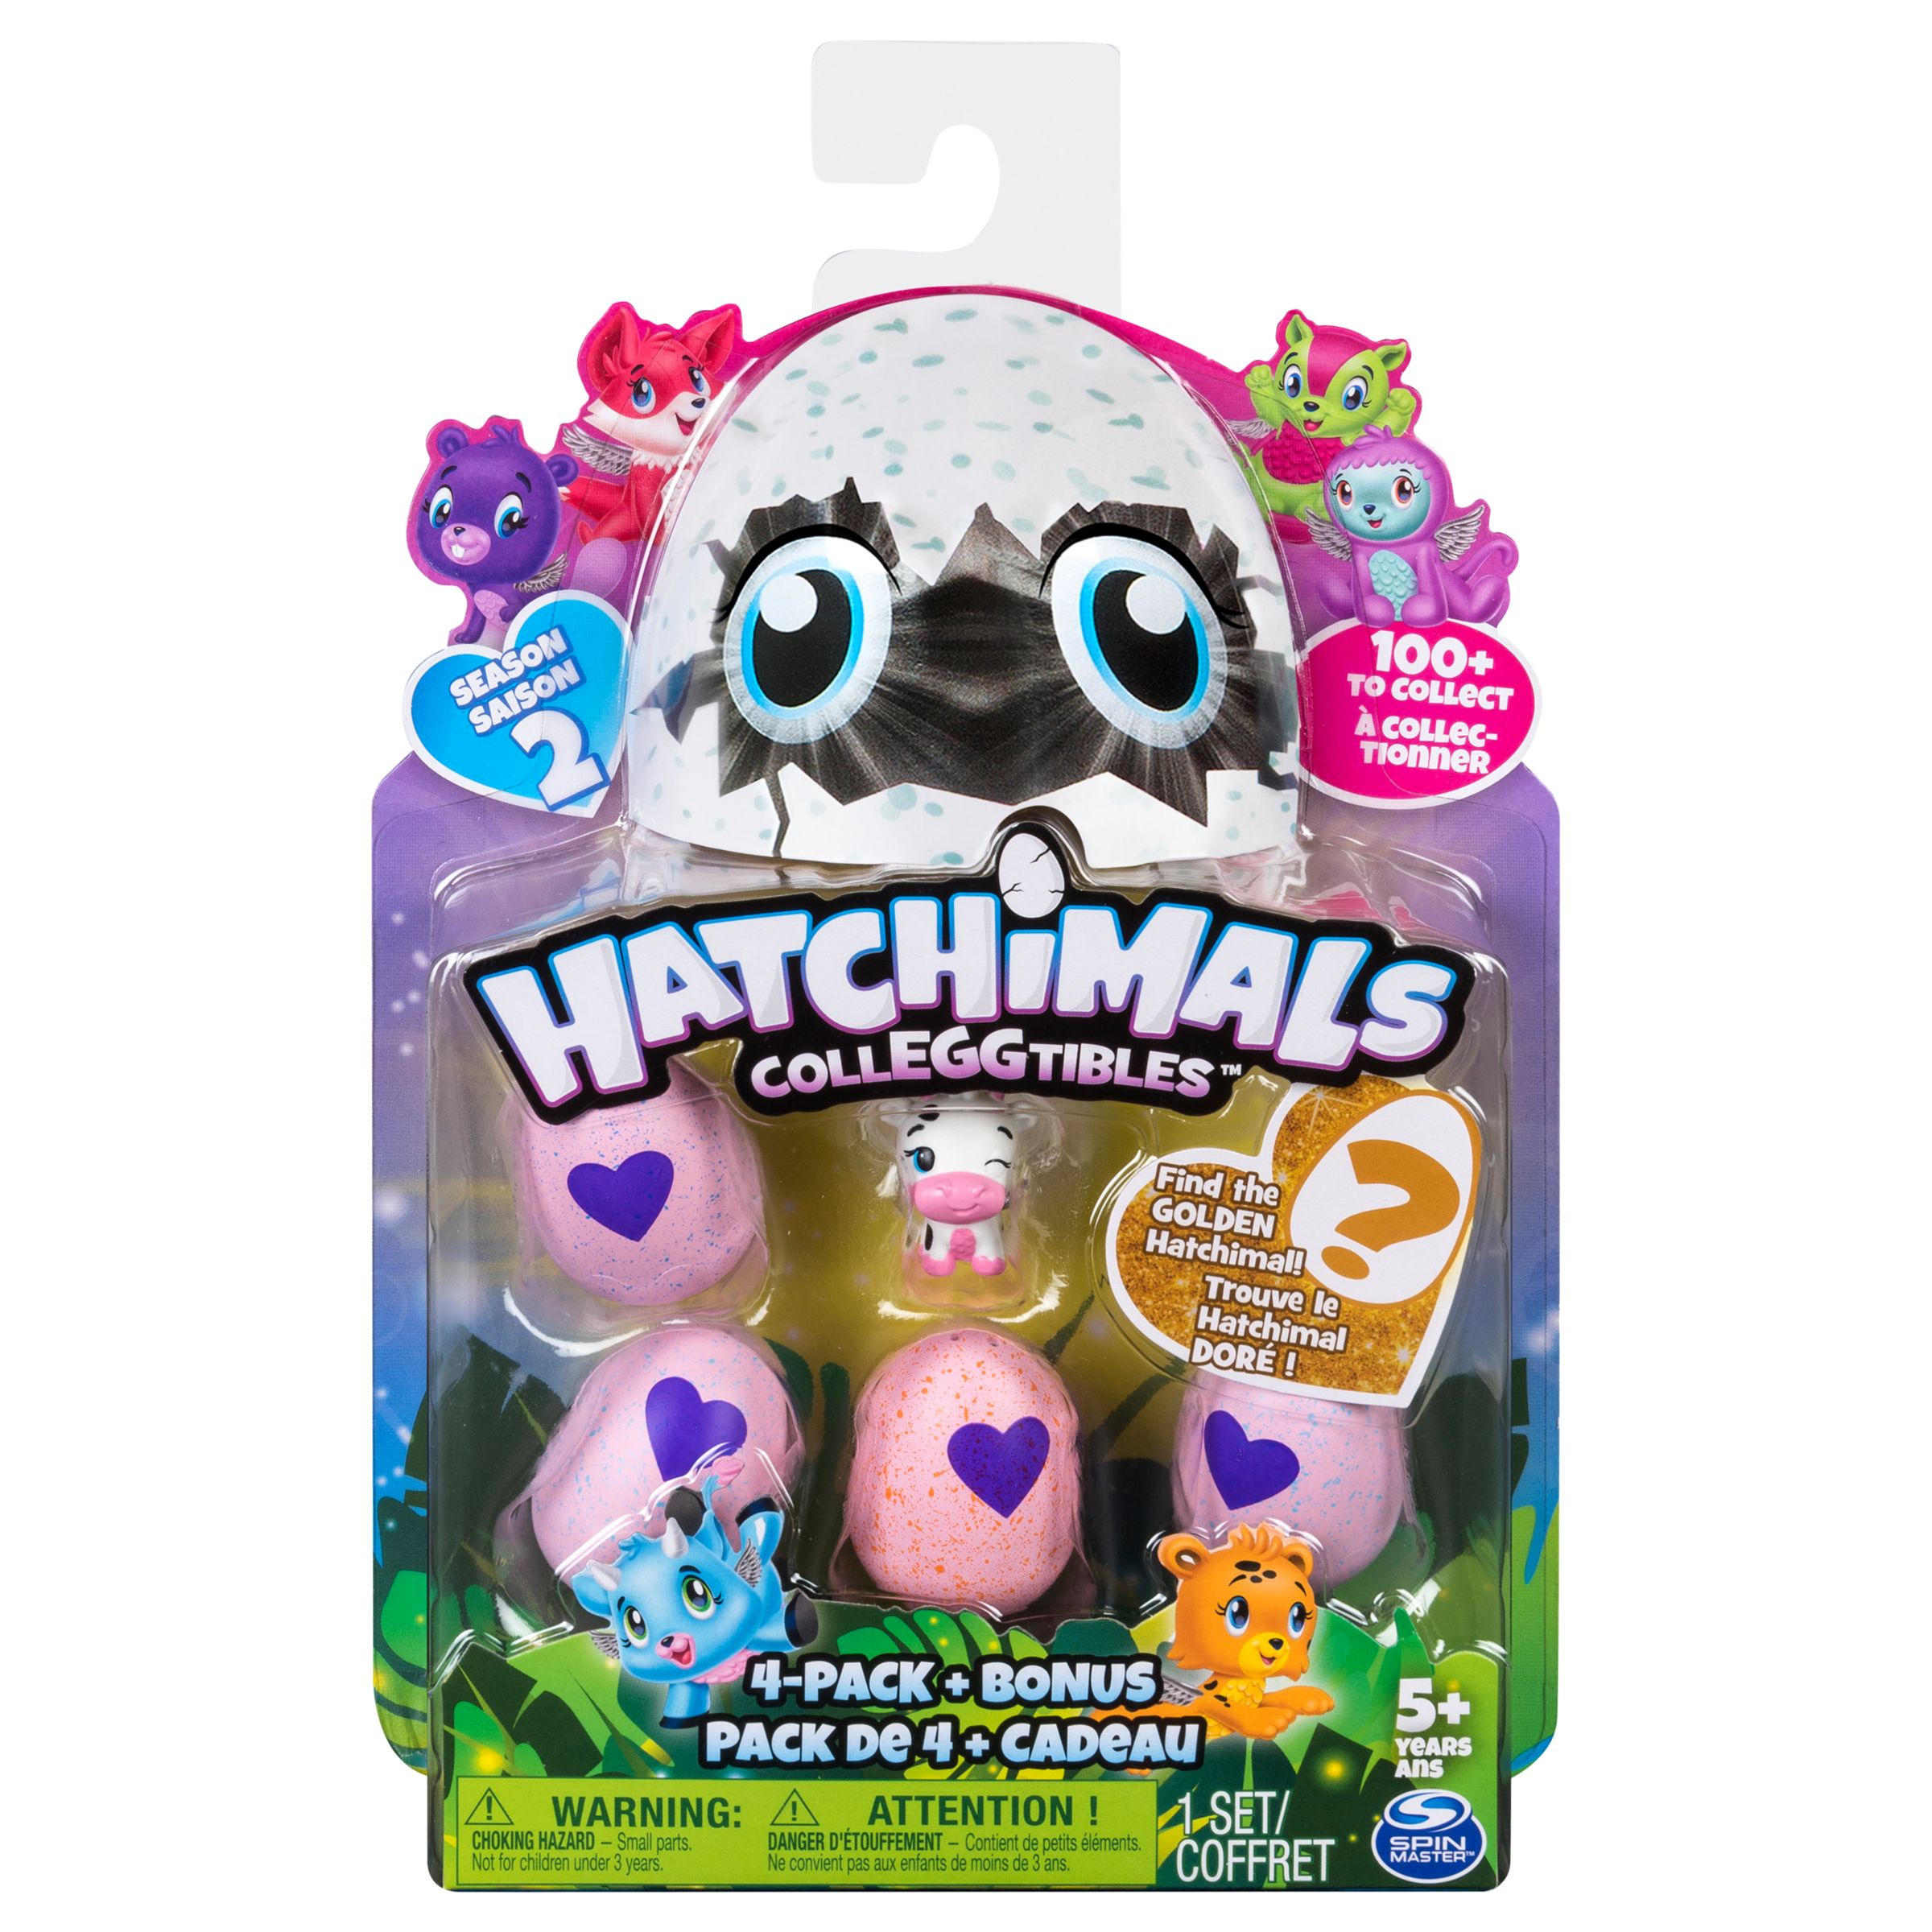 NEW Hatchimals CollEGGtibles 4-Pack Eggs Bonus Figure Season 4 BLIND BOX